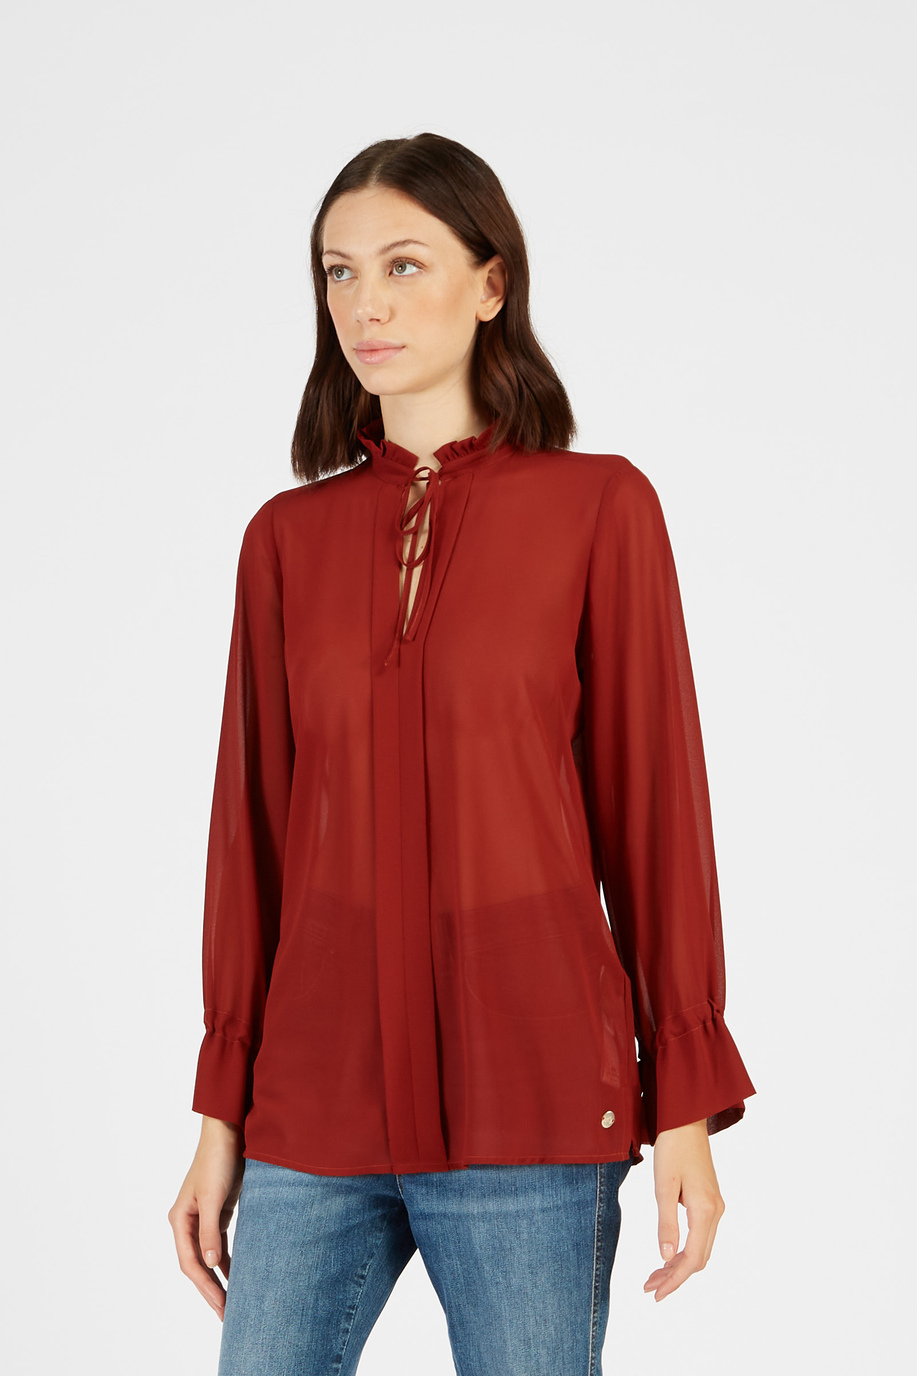 Women’s shirt Argentina fabric georgette regular fit long sleeves - Apparel | La Martina - Official Online Shop